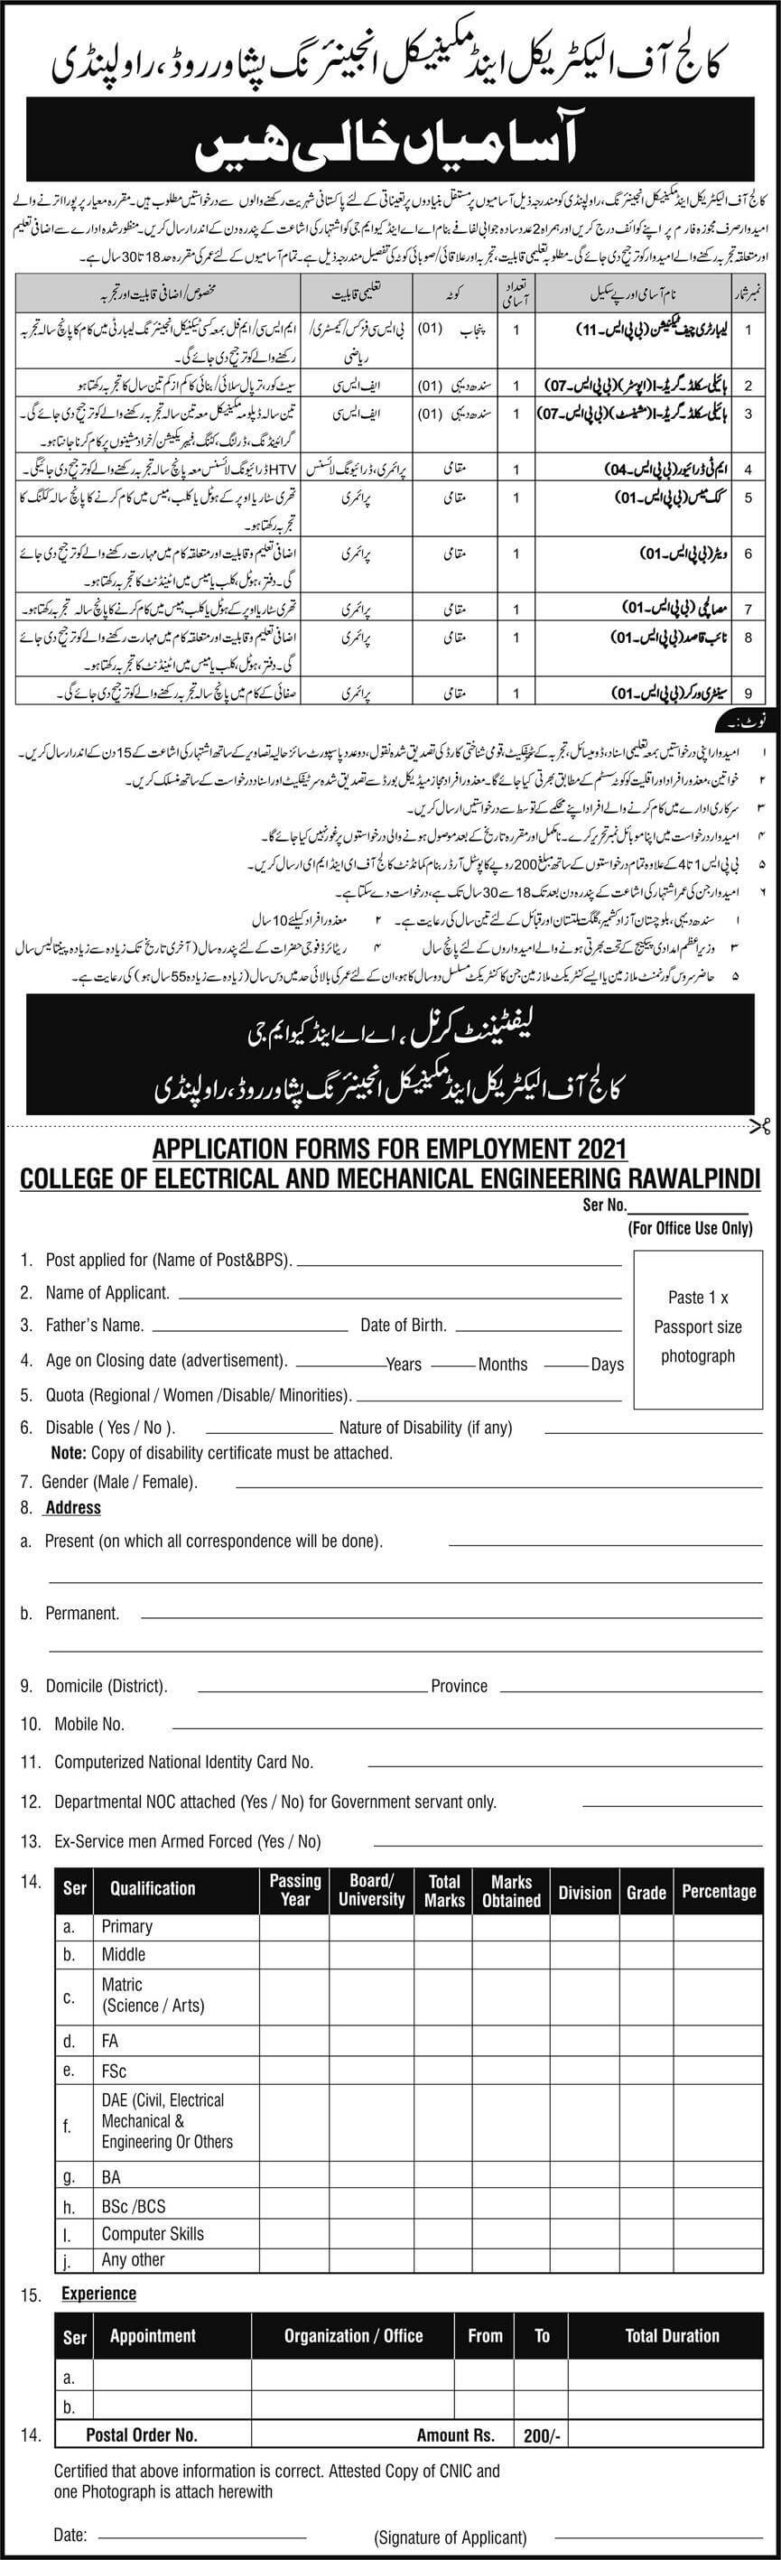 College of Electrical and Mechanical Engineering (EME) Rawalpindi Jobs 2021 | Latest Job in Pakistan